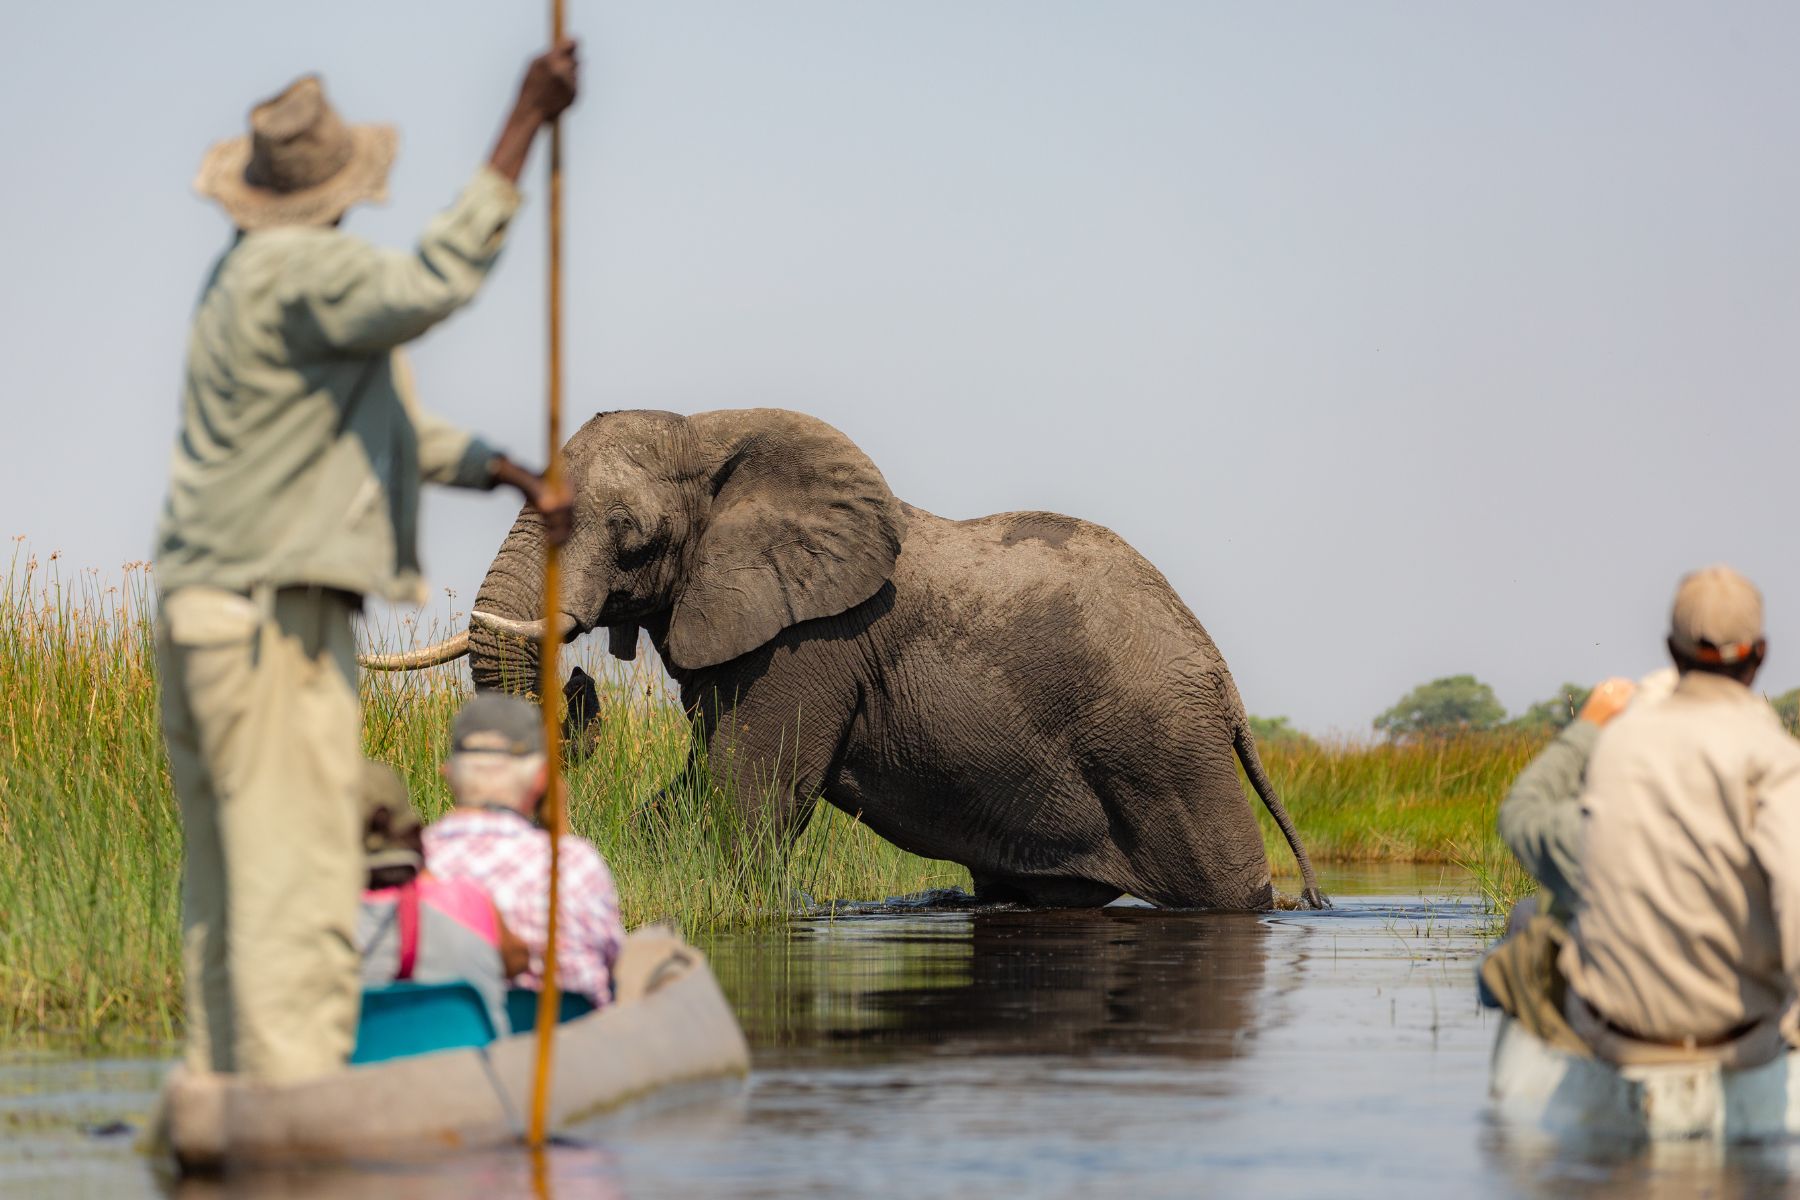 An encounter with an elephant during a Mokoro safari in the Okavango Delta, Botswana